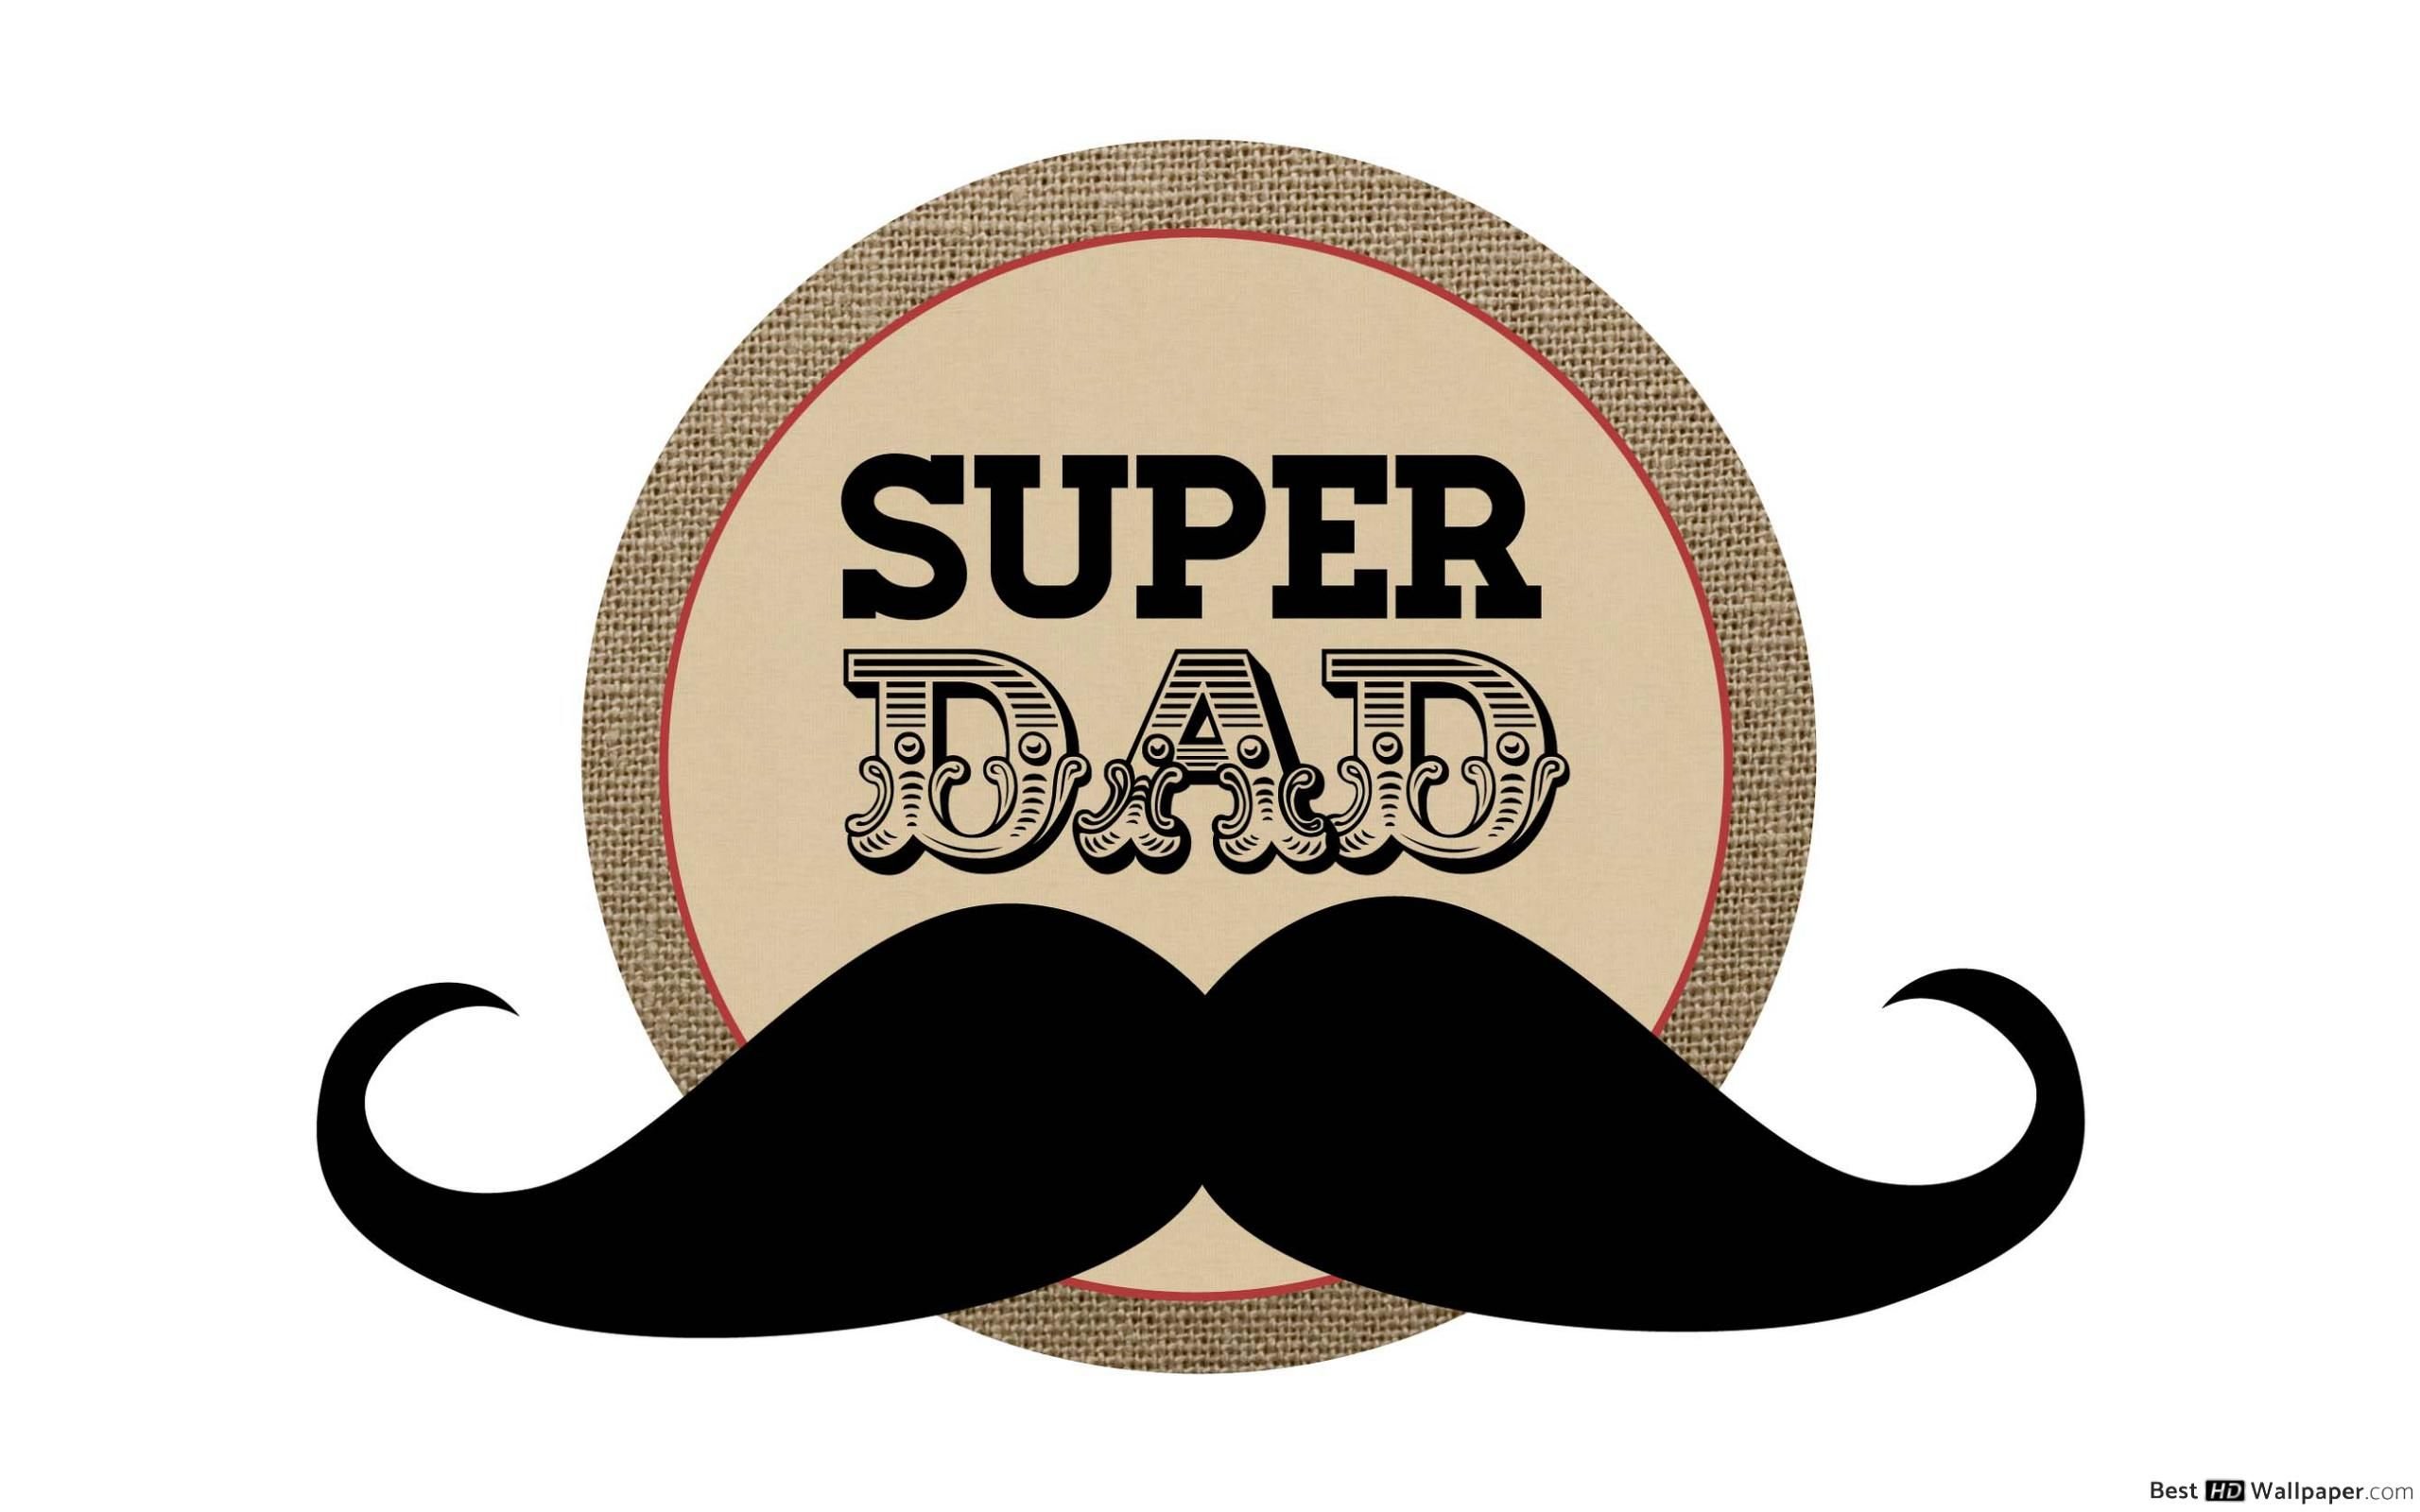 SUPER DAD! 2K wallpaper download